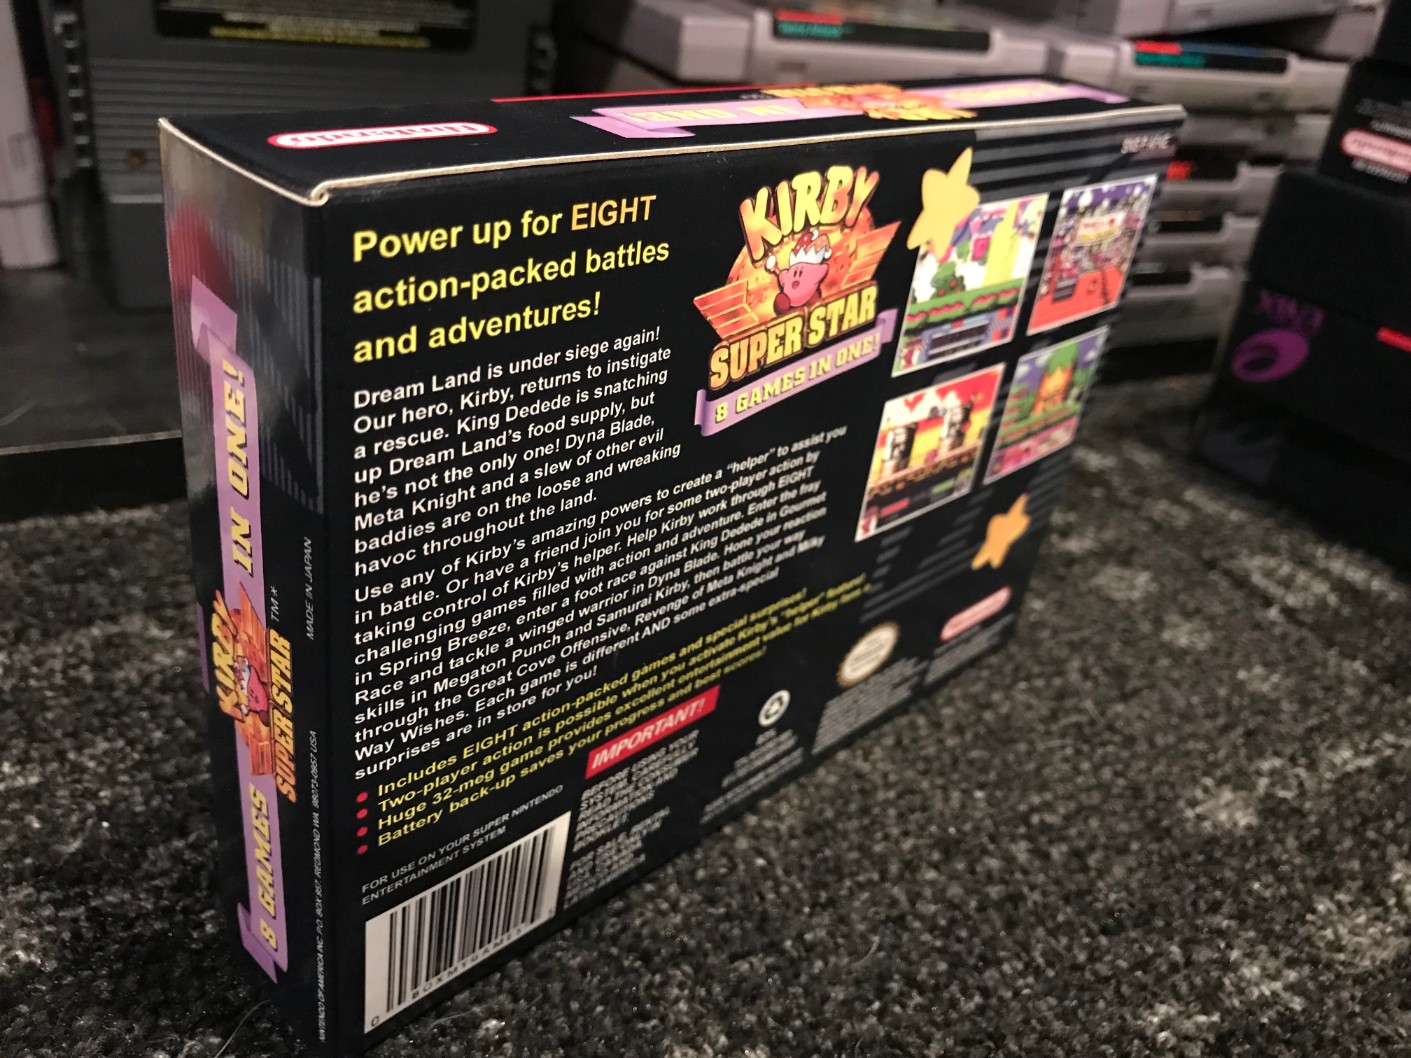 Kirby Super Star, Super Nintendo, Games